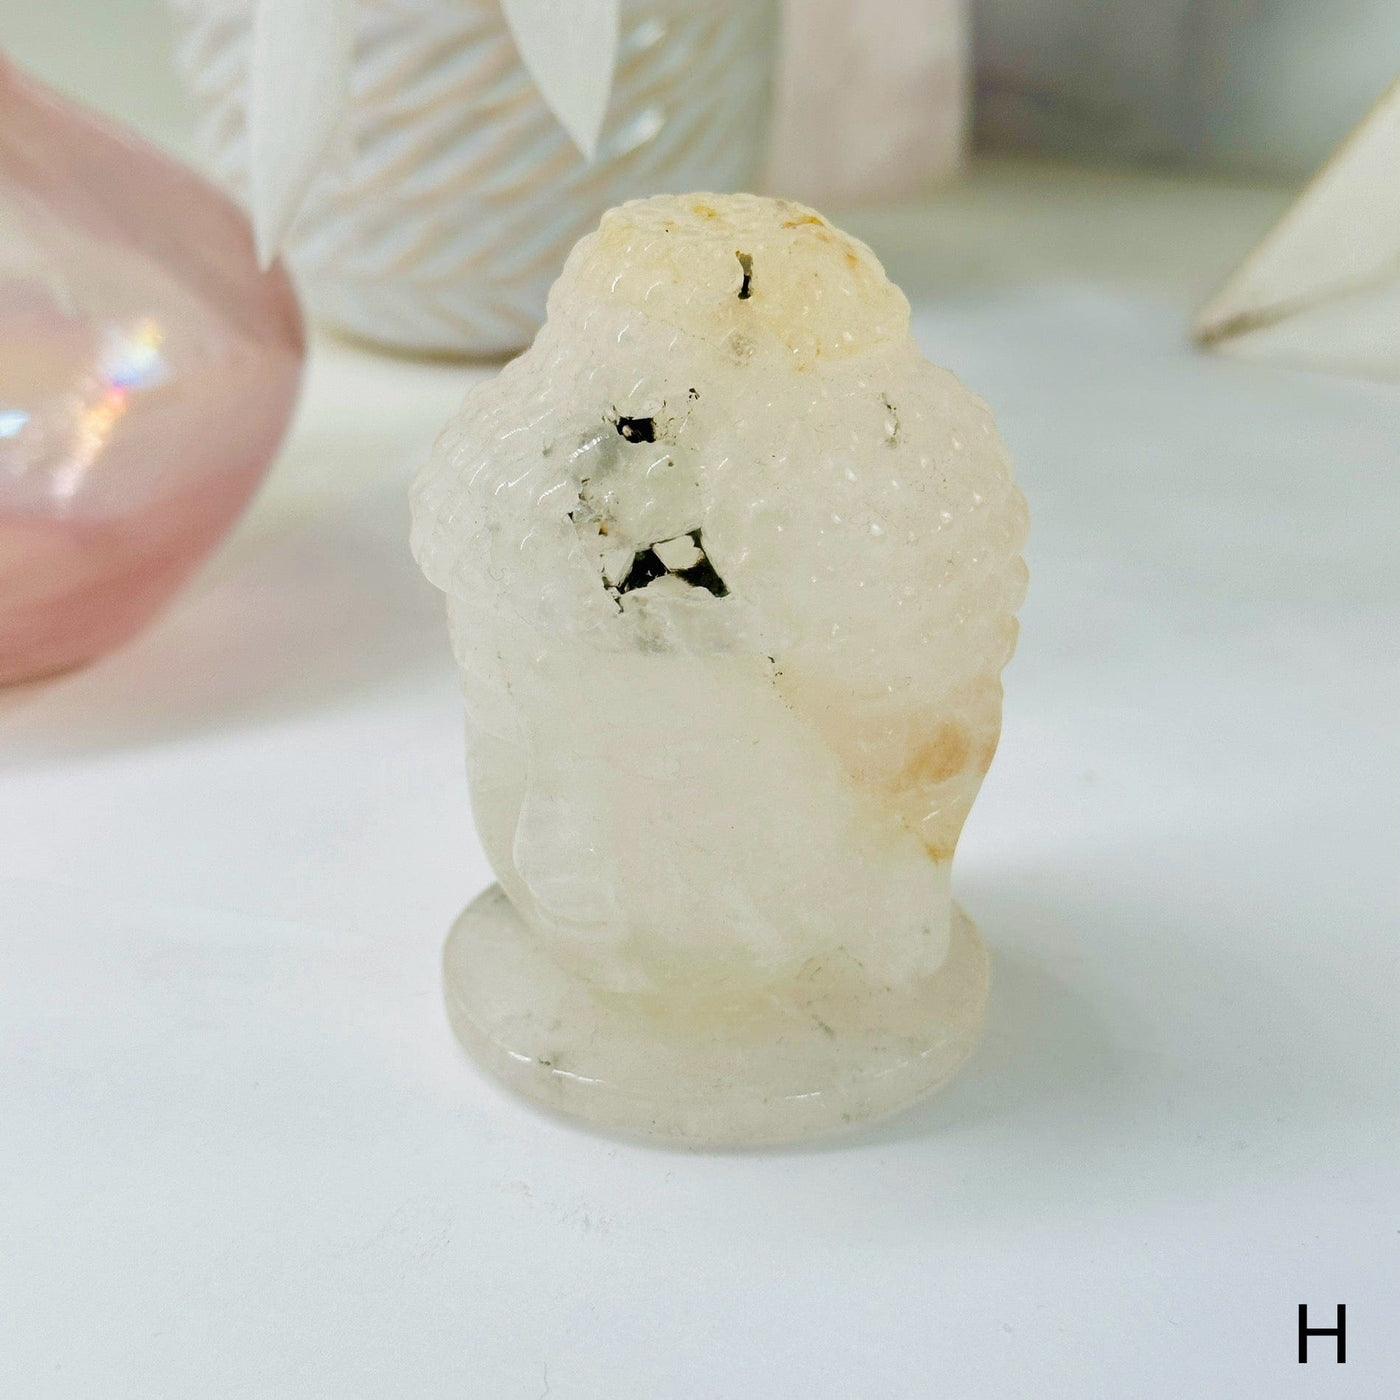 Crystal Quartz Carved Buddha Head - YOU CHOOSE variant H labeled